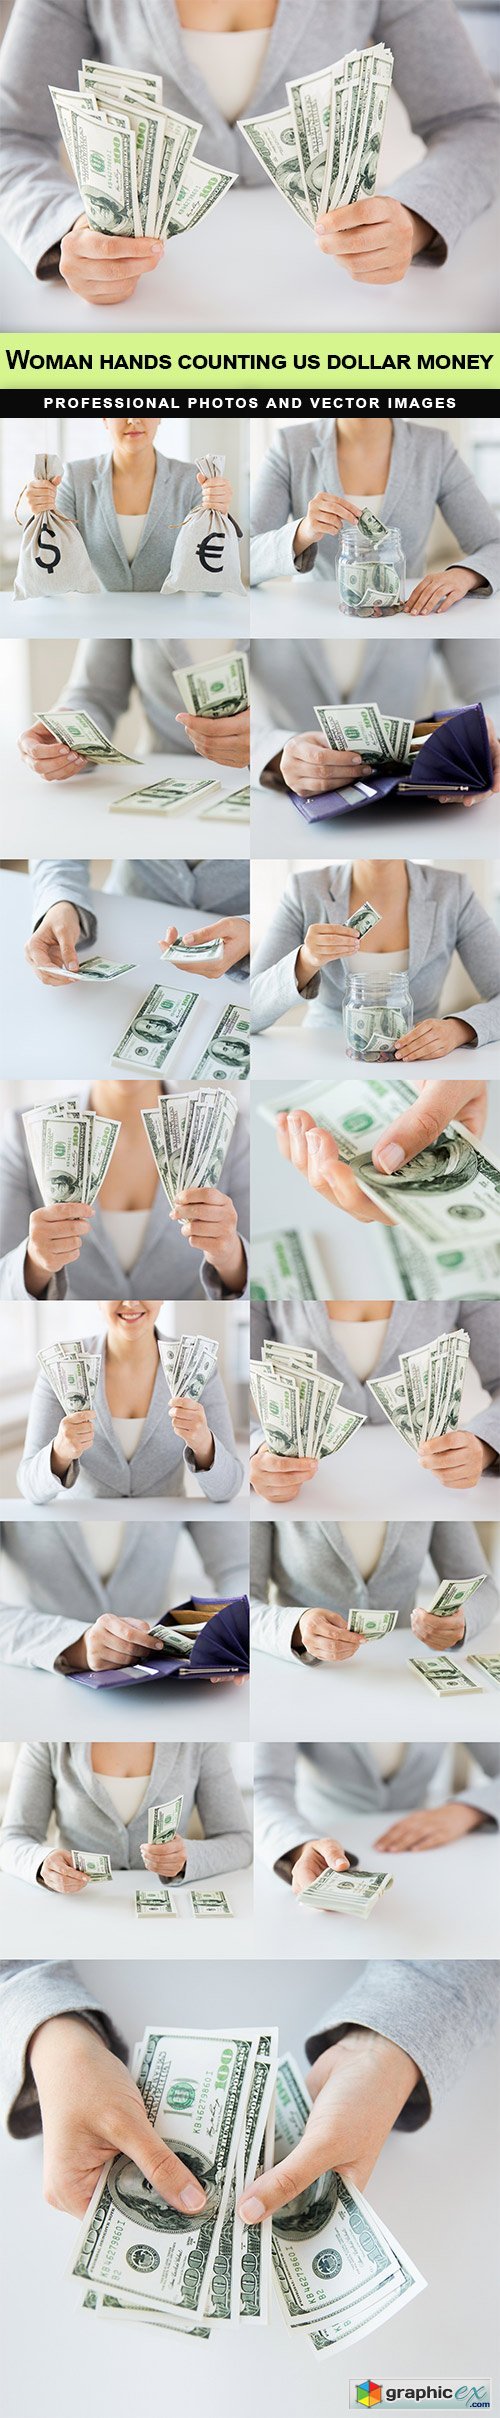 Woman hands counting us dollar money - 15 UHQ JPEG